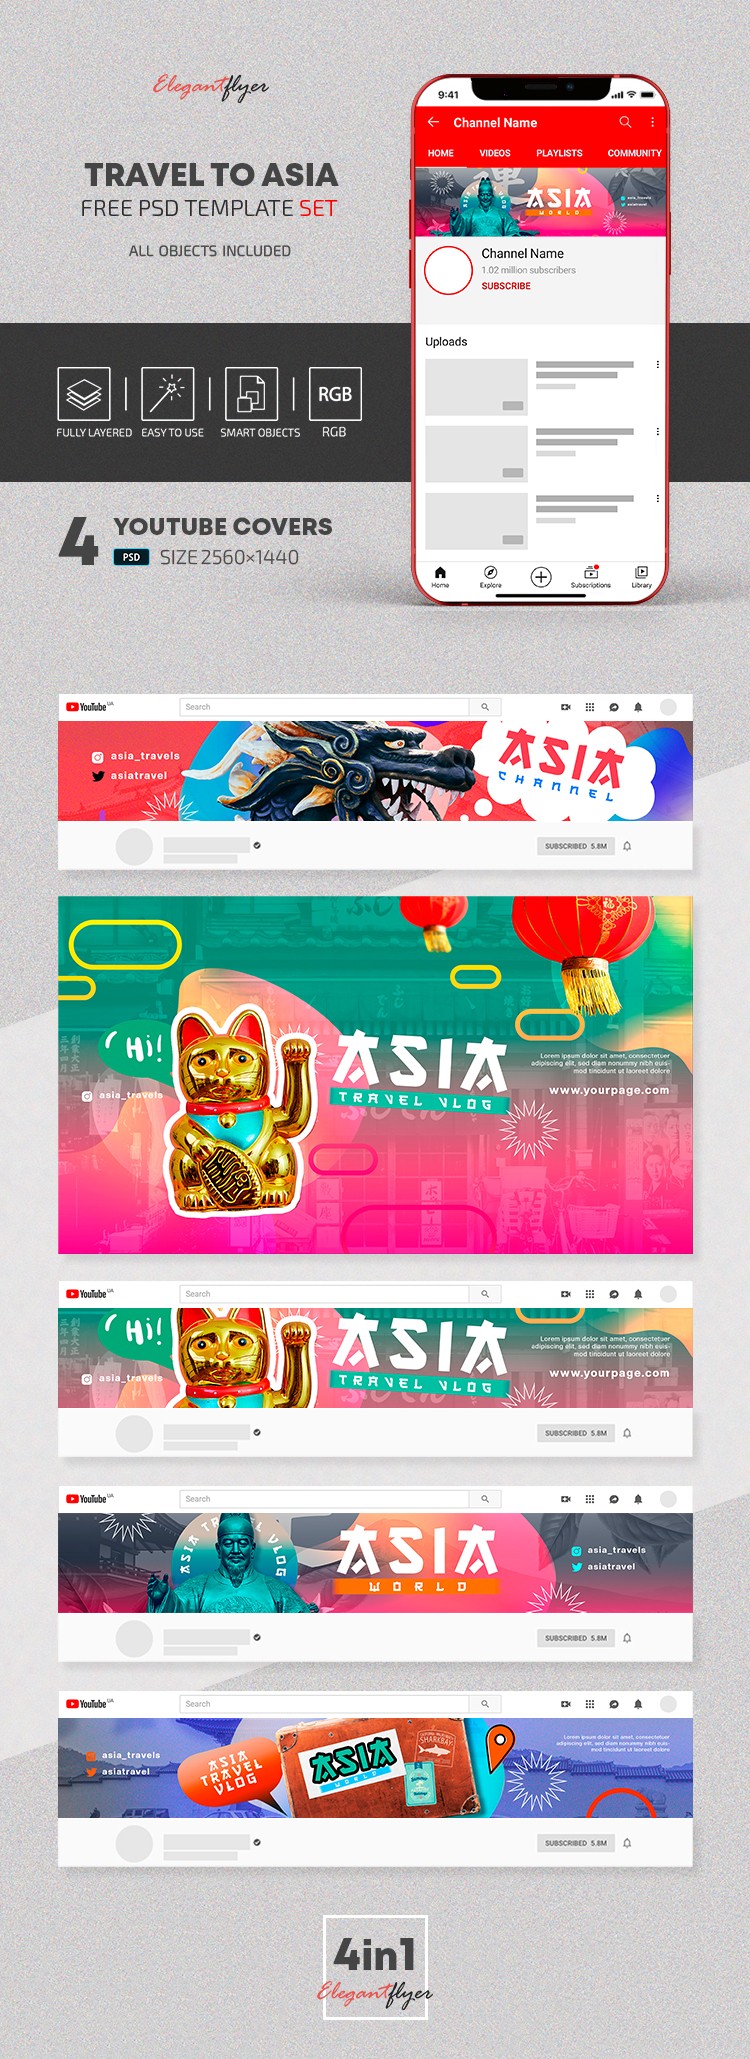 Travel to Asia Youtube by ElegantFlyer